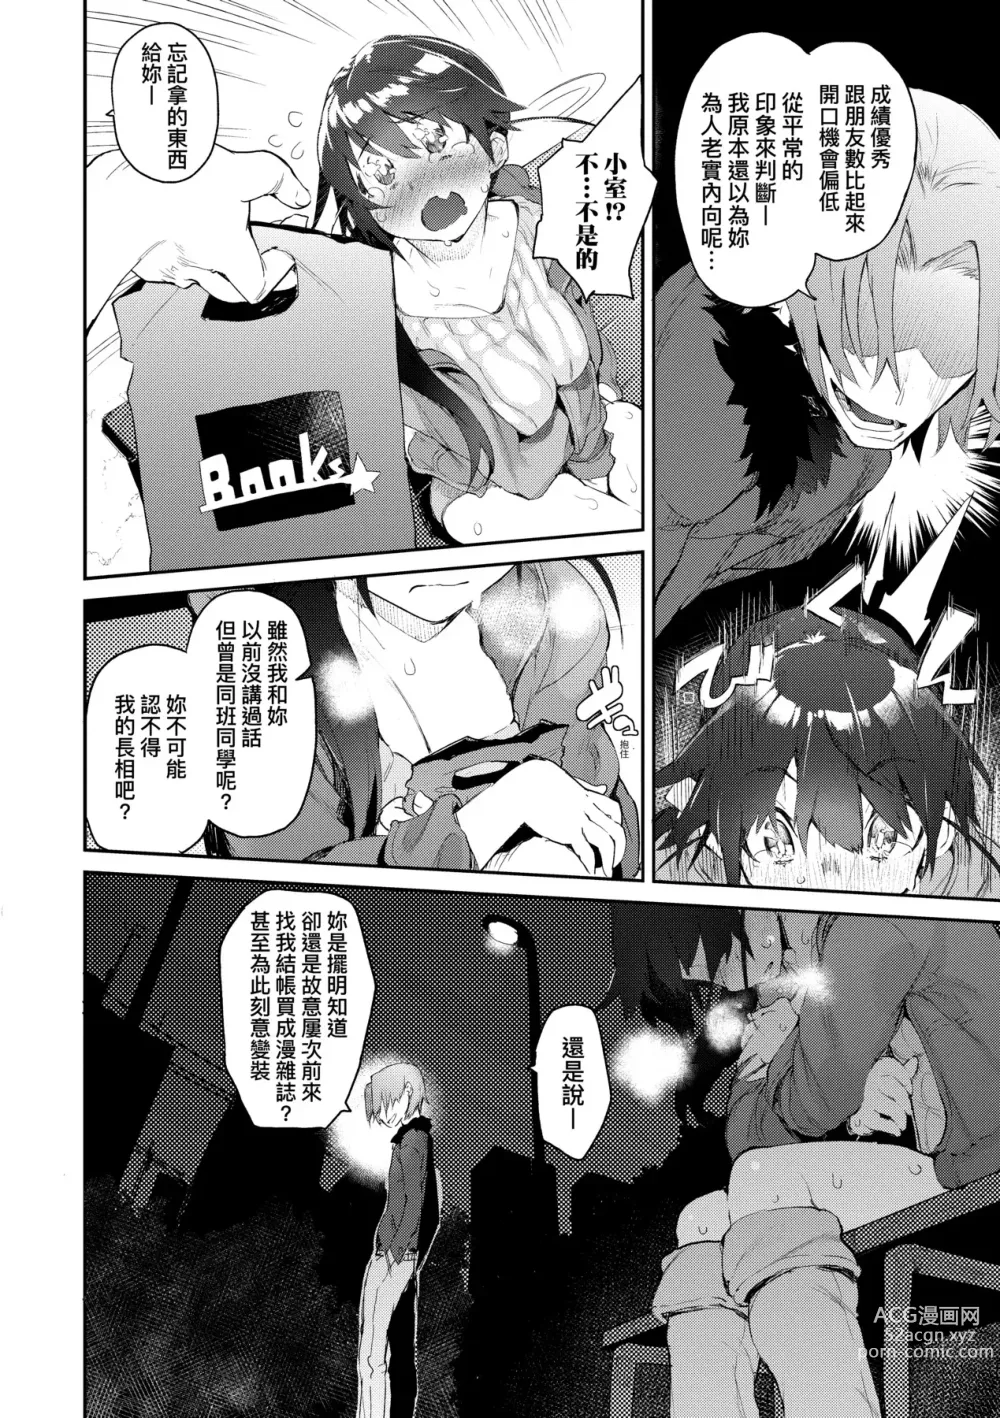 Page 13 of manga 眼眸令我陶醉 (decensored)